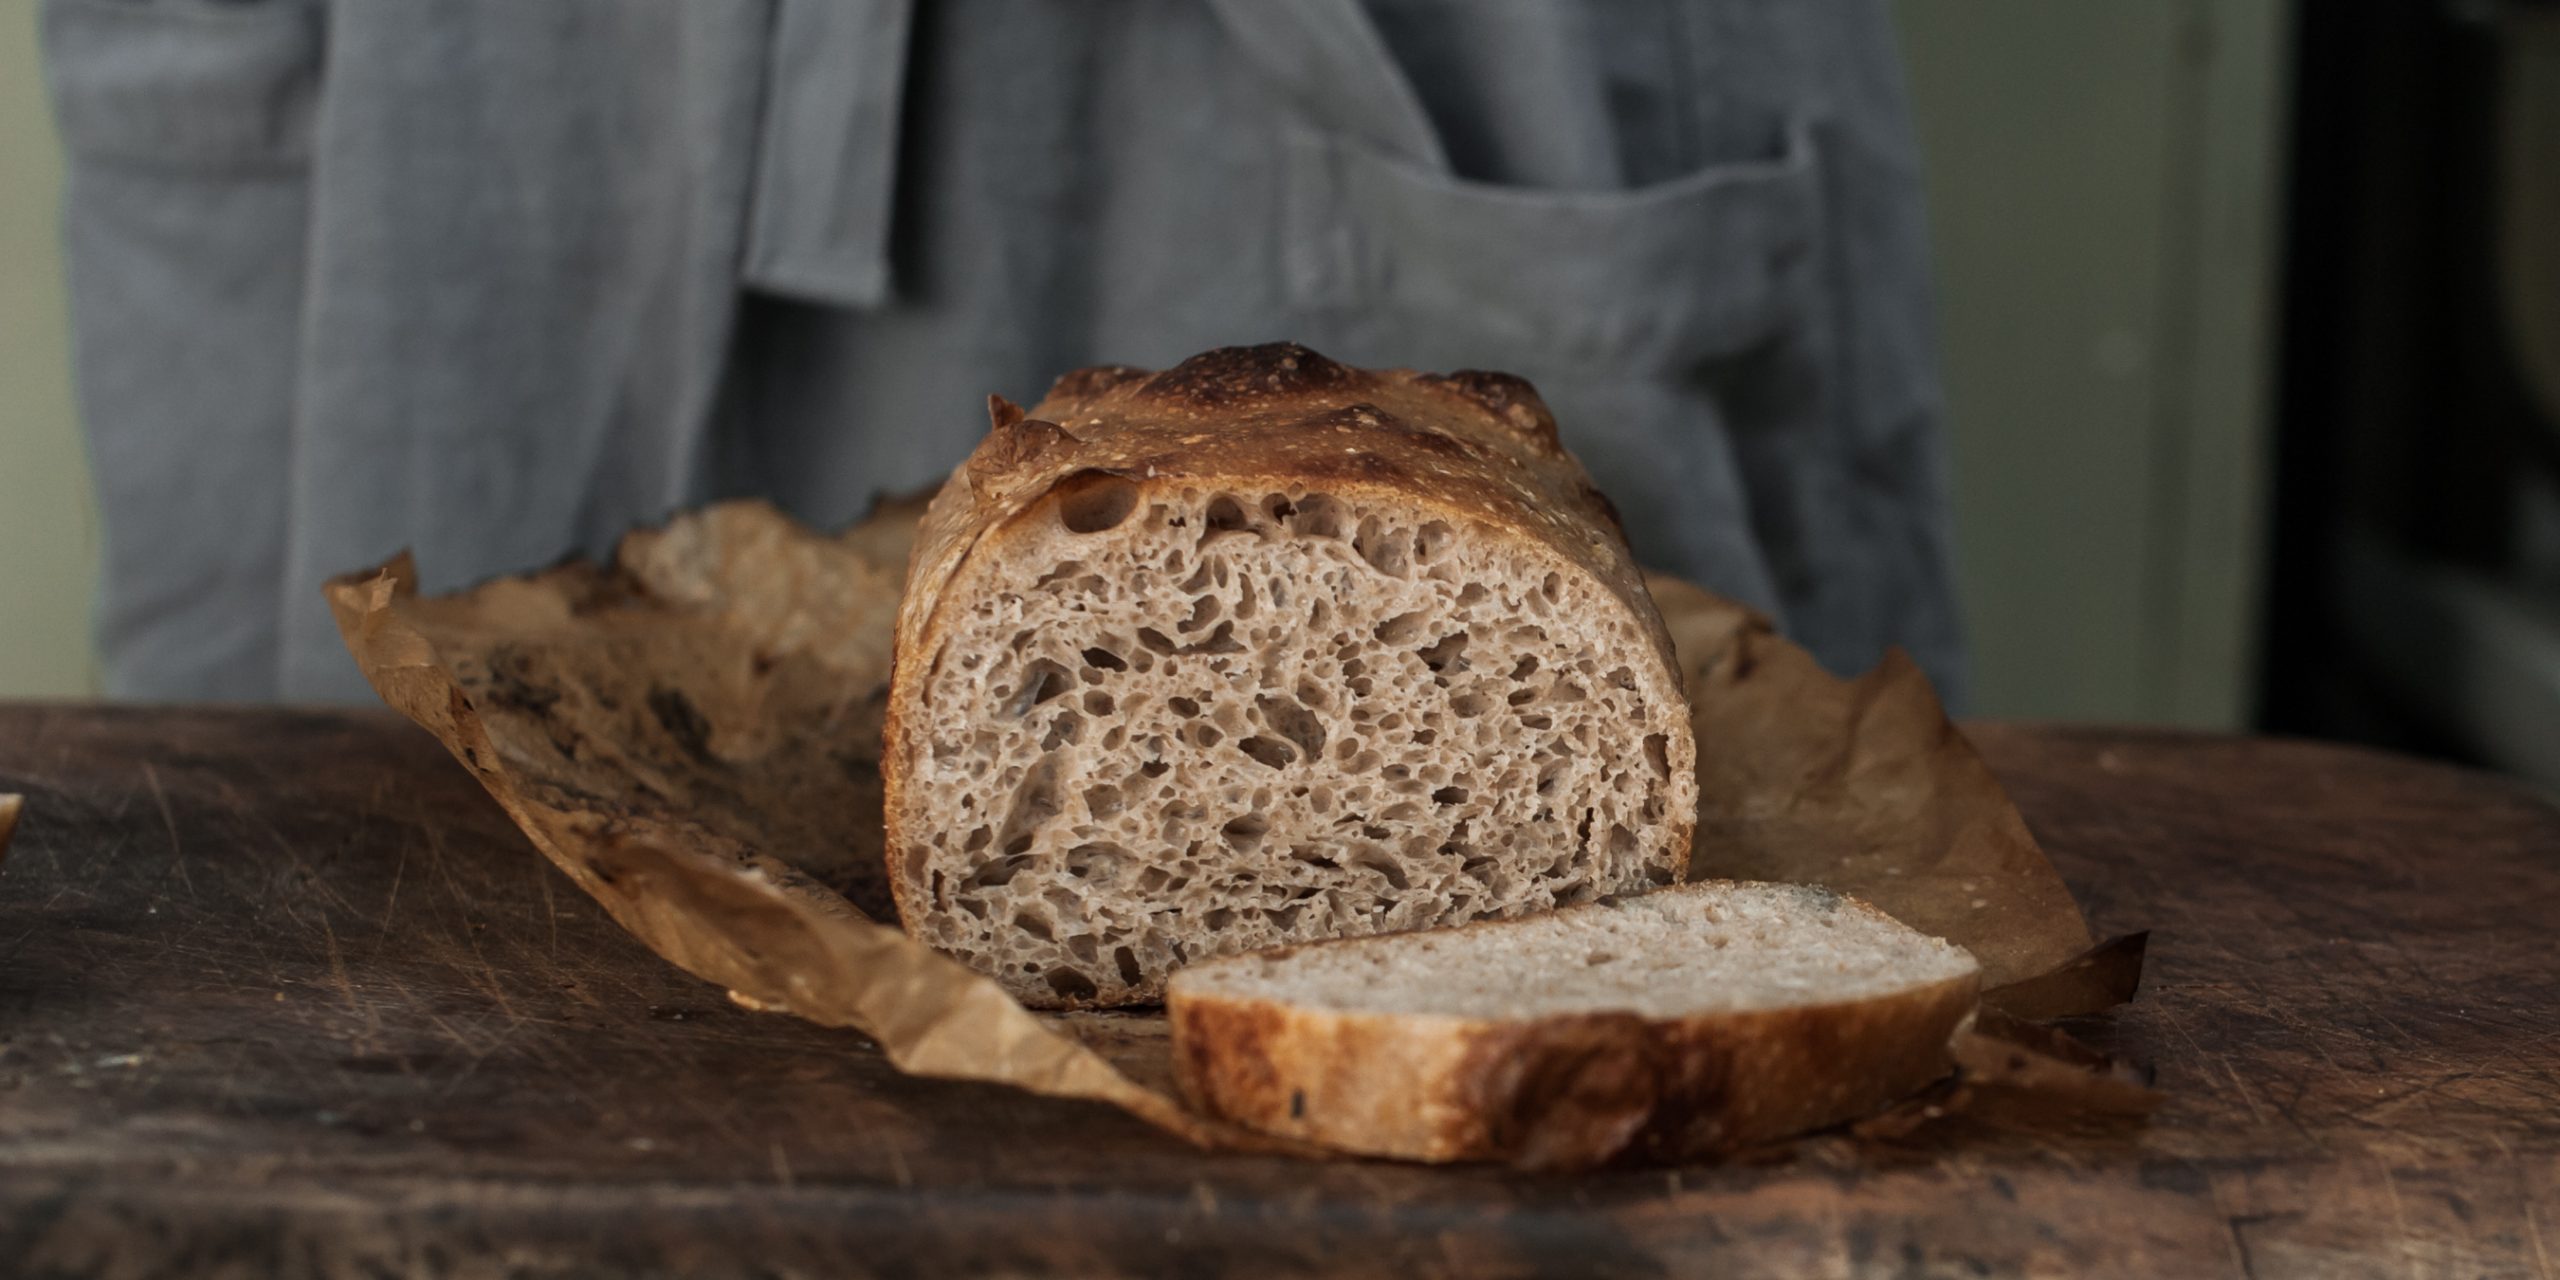 Is Sourdough Bread Good for Diabetics